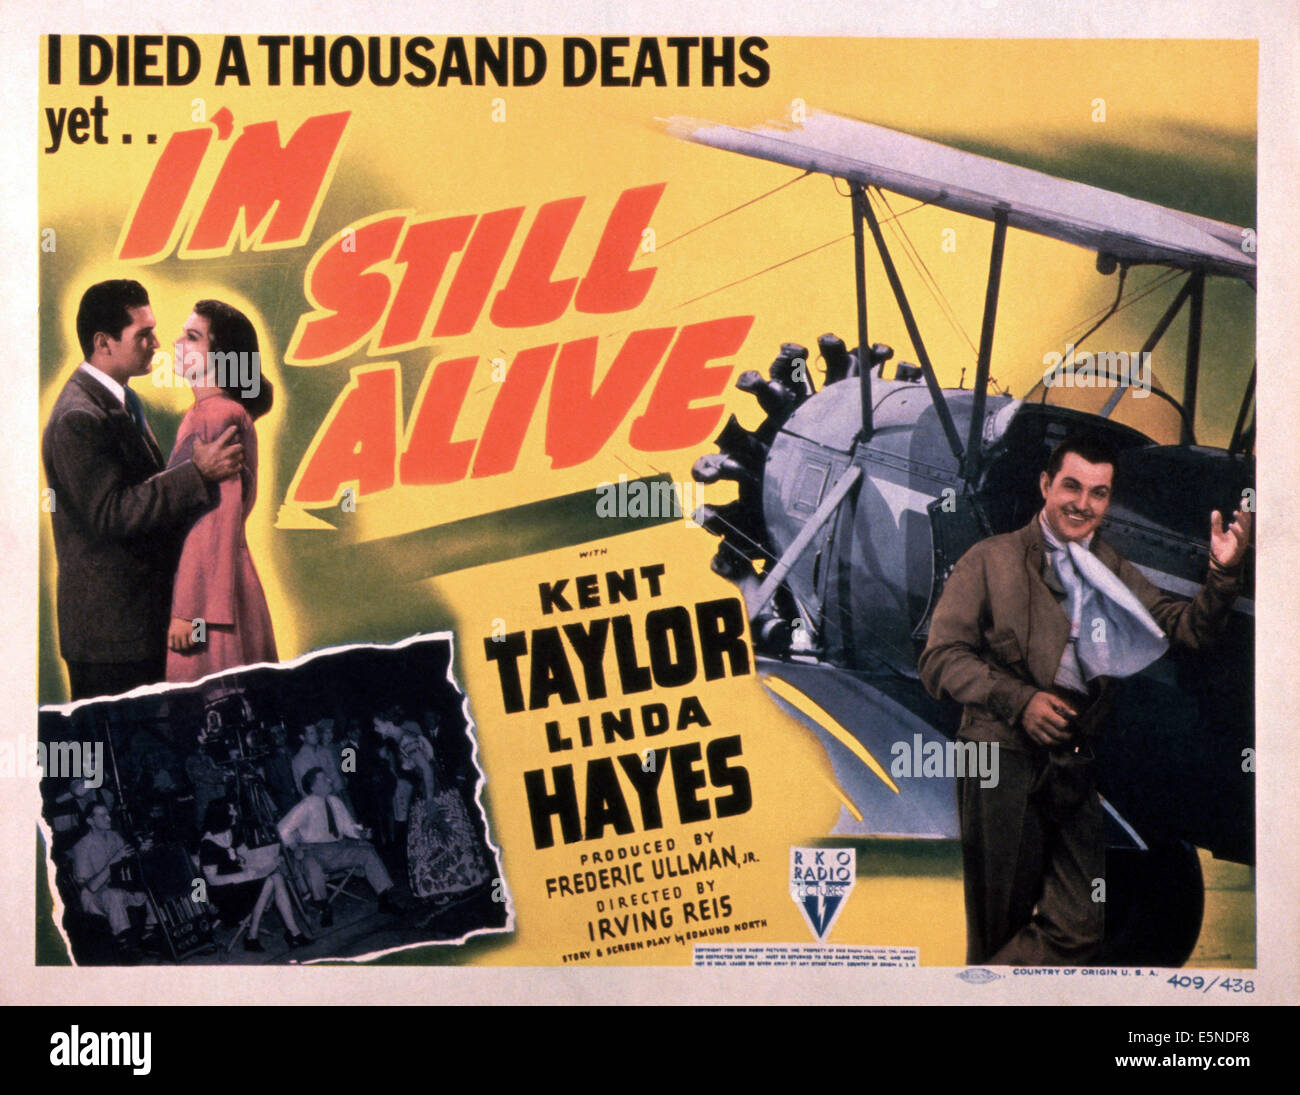 I'M STILL ALIVE, from left: Kent Taylor, Linda Hayes, Kent Taylor, 1940 Stock Photo